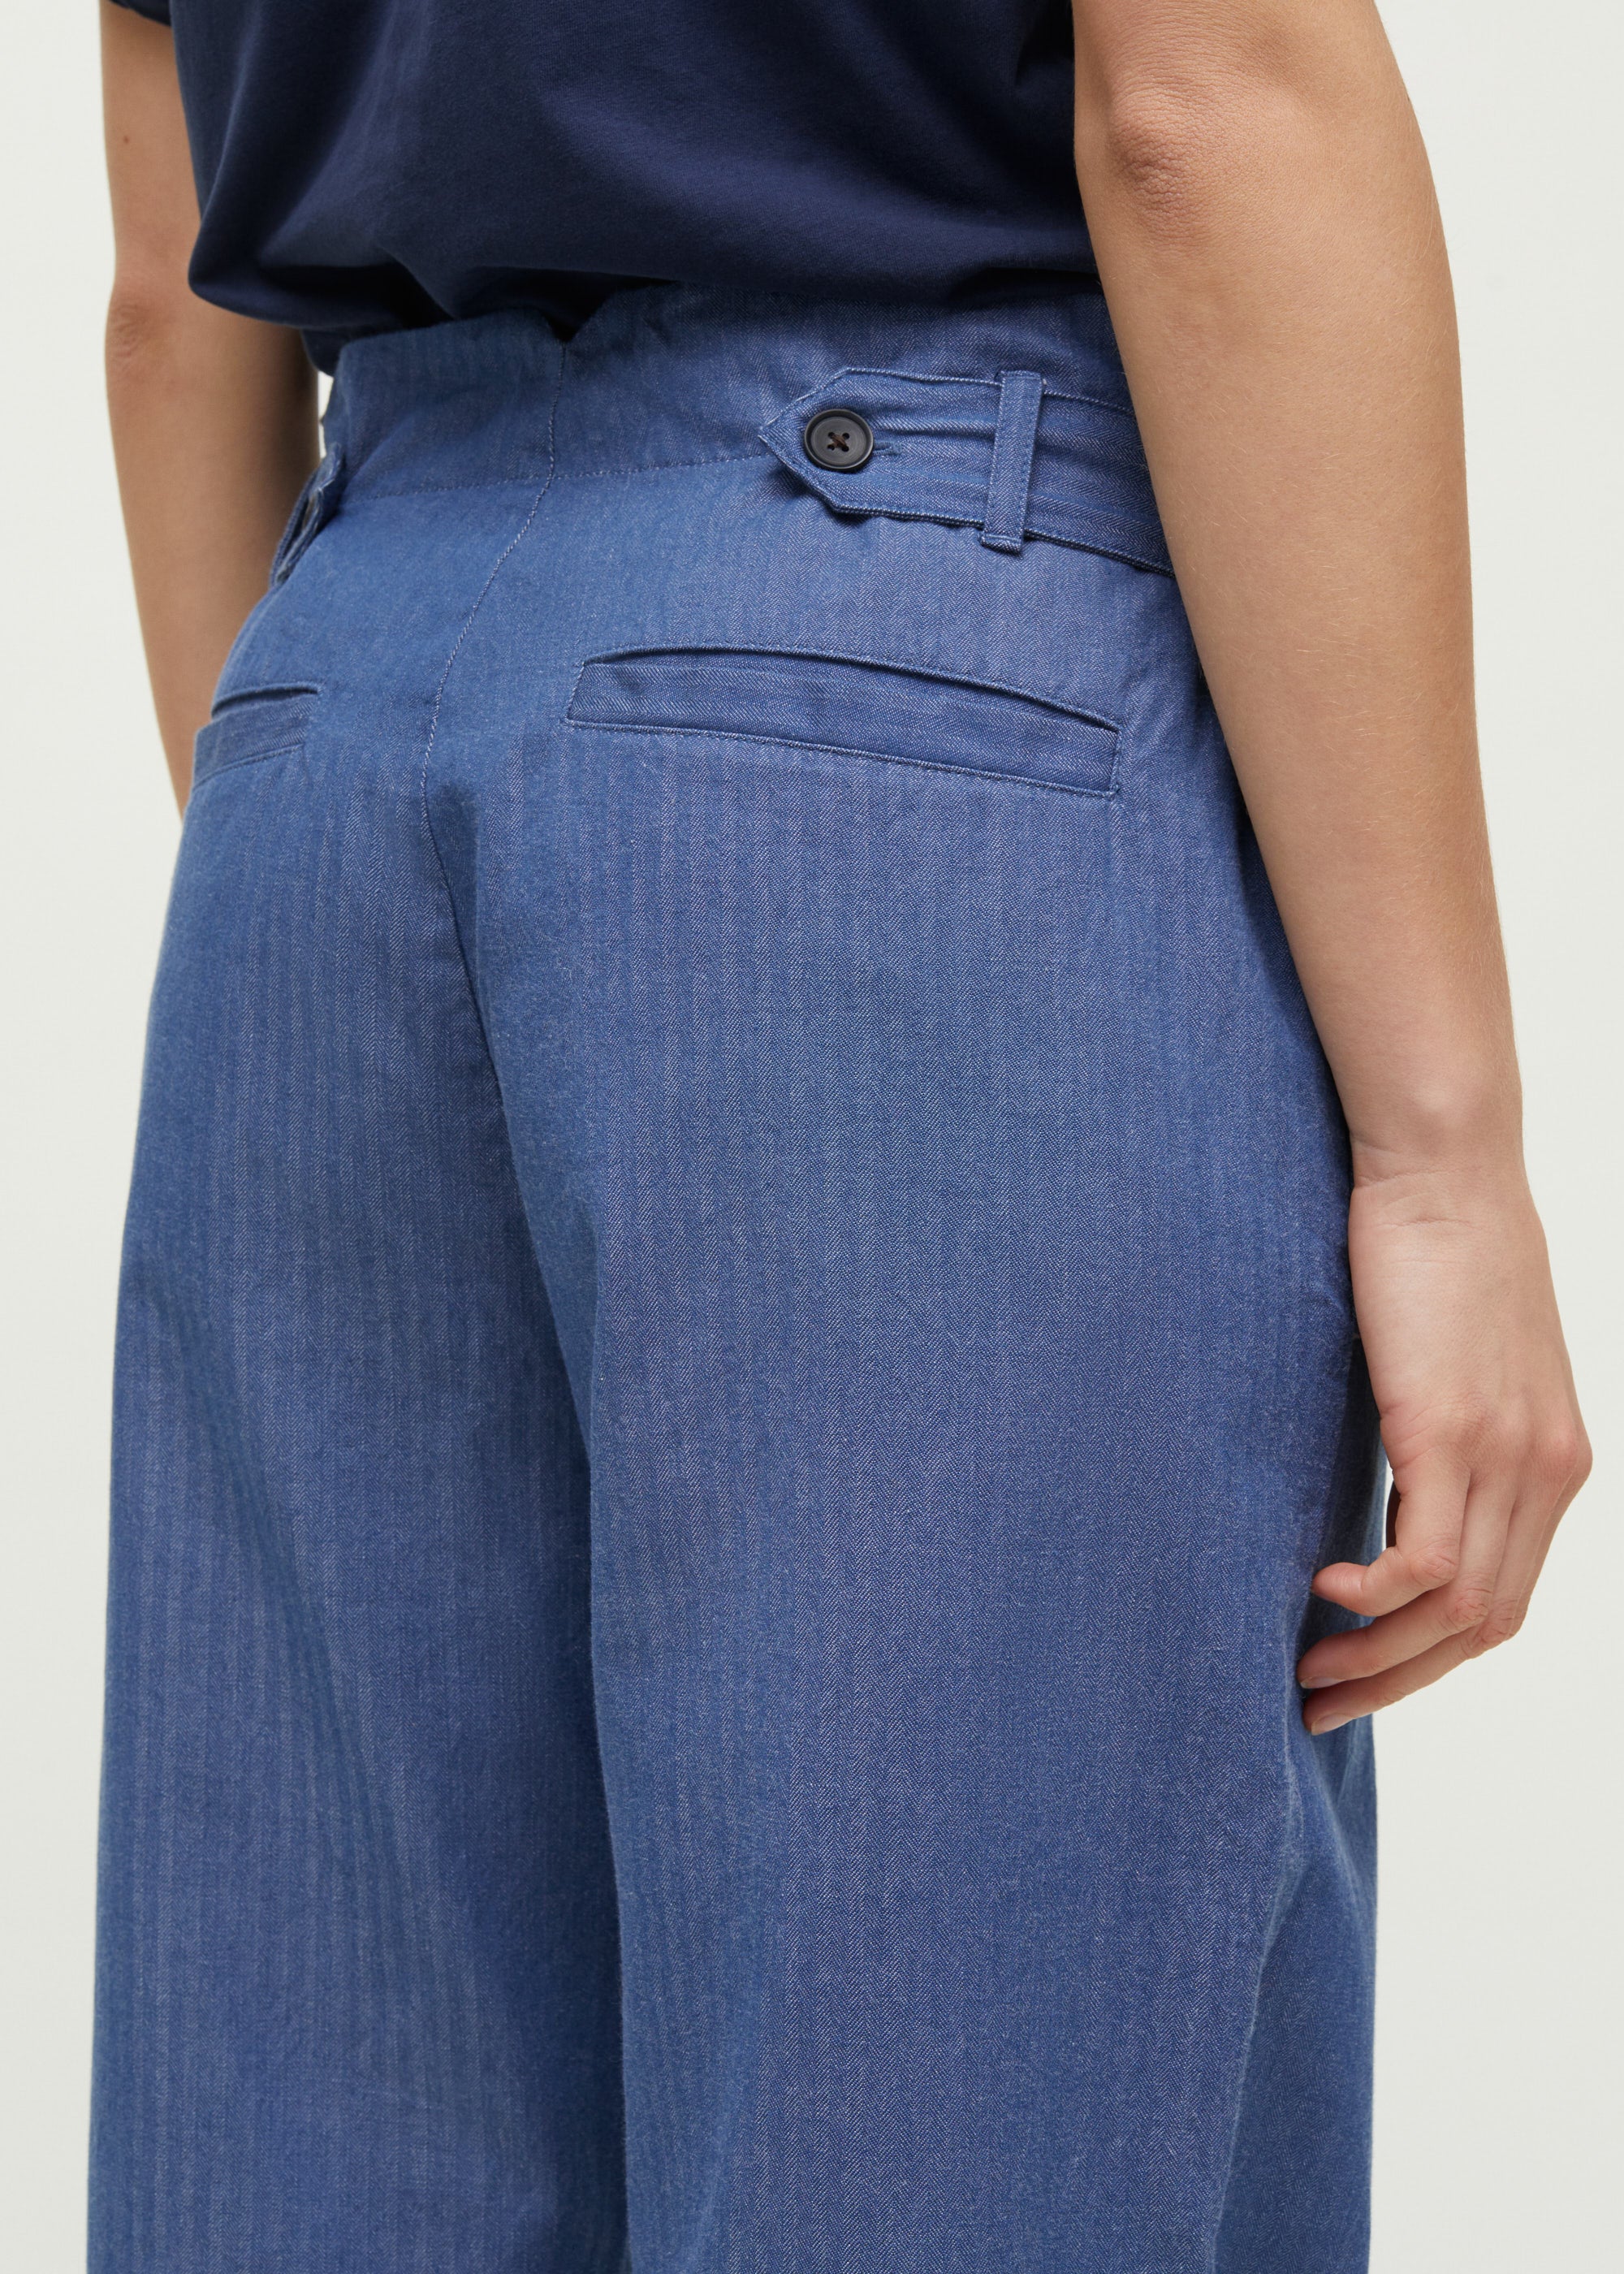 Willa pant herringbone | Blue Jeans